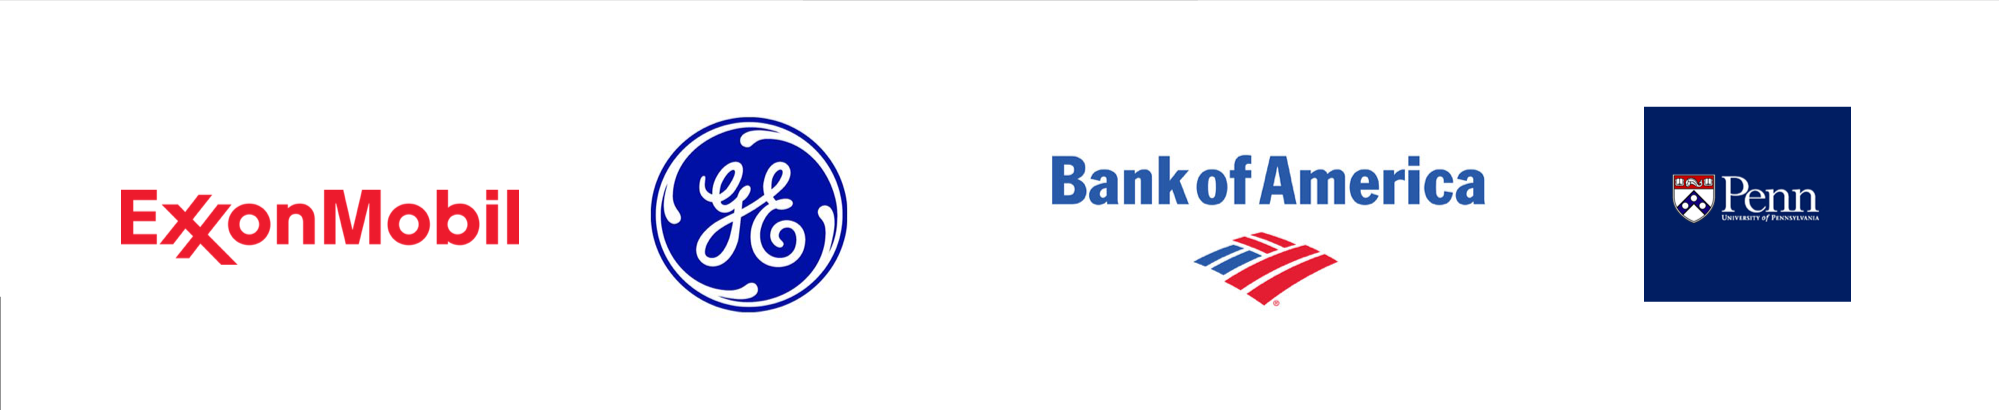 ExxonMobil, Bank of America, Penn and GE logos